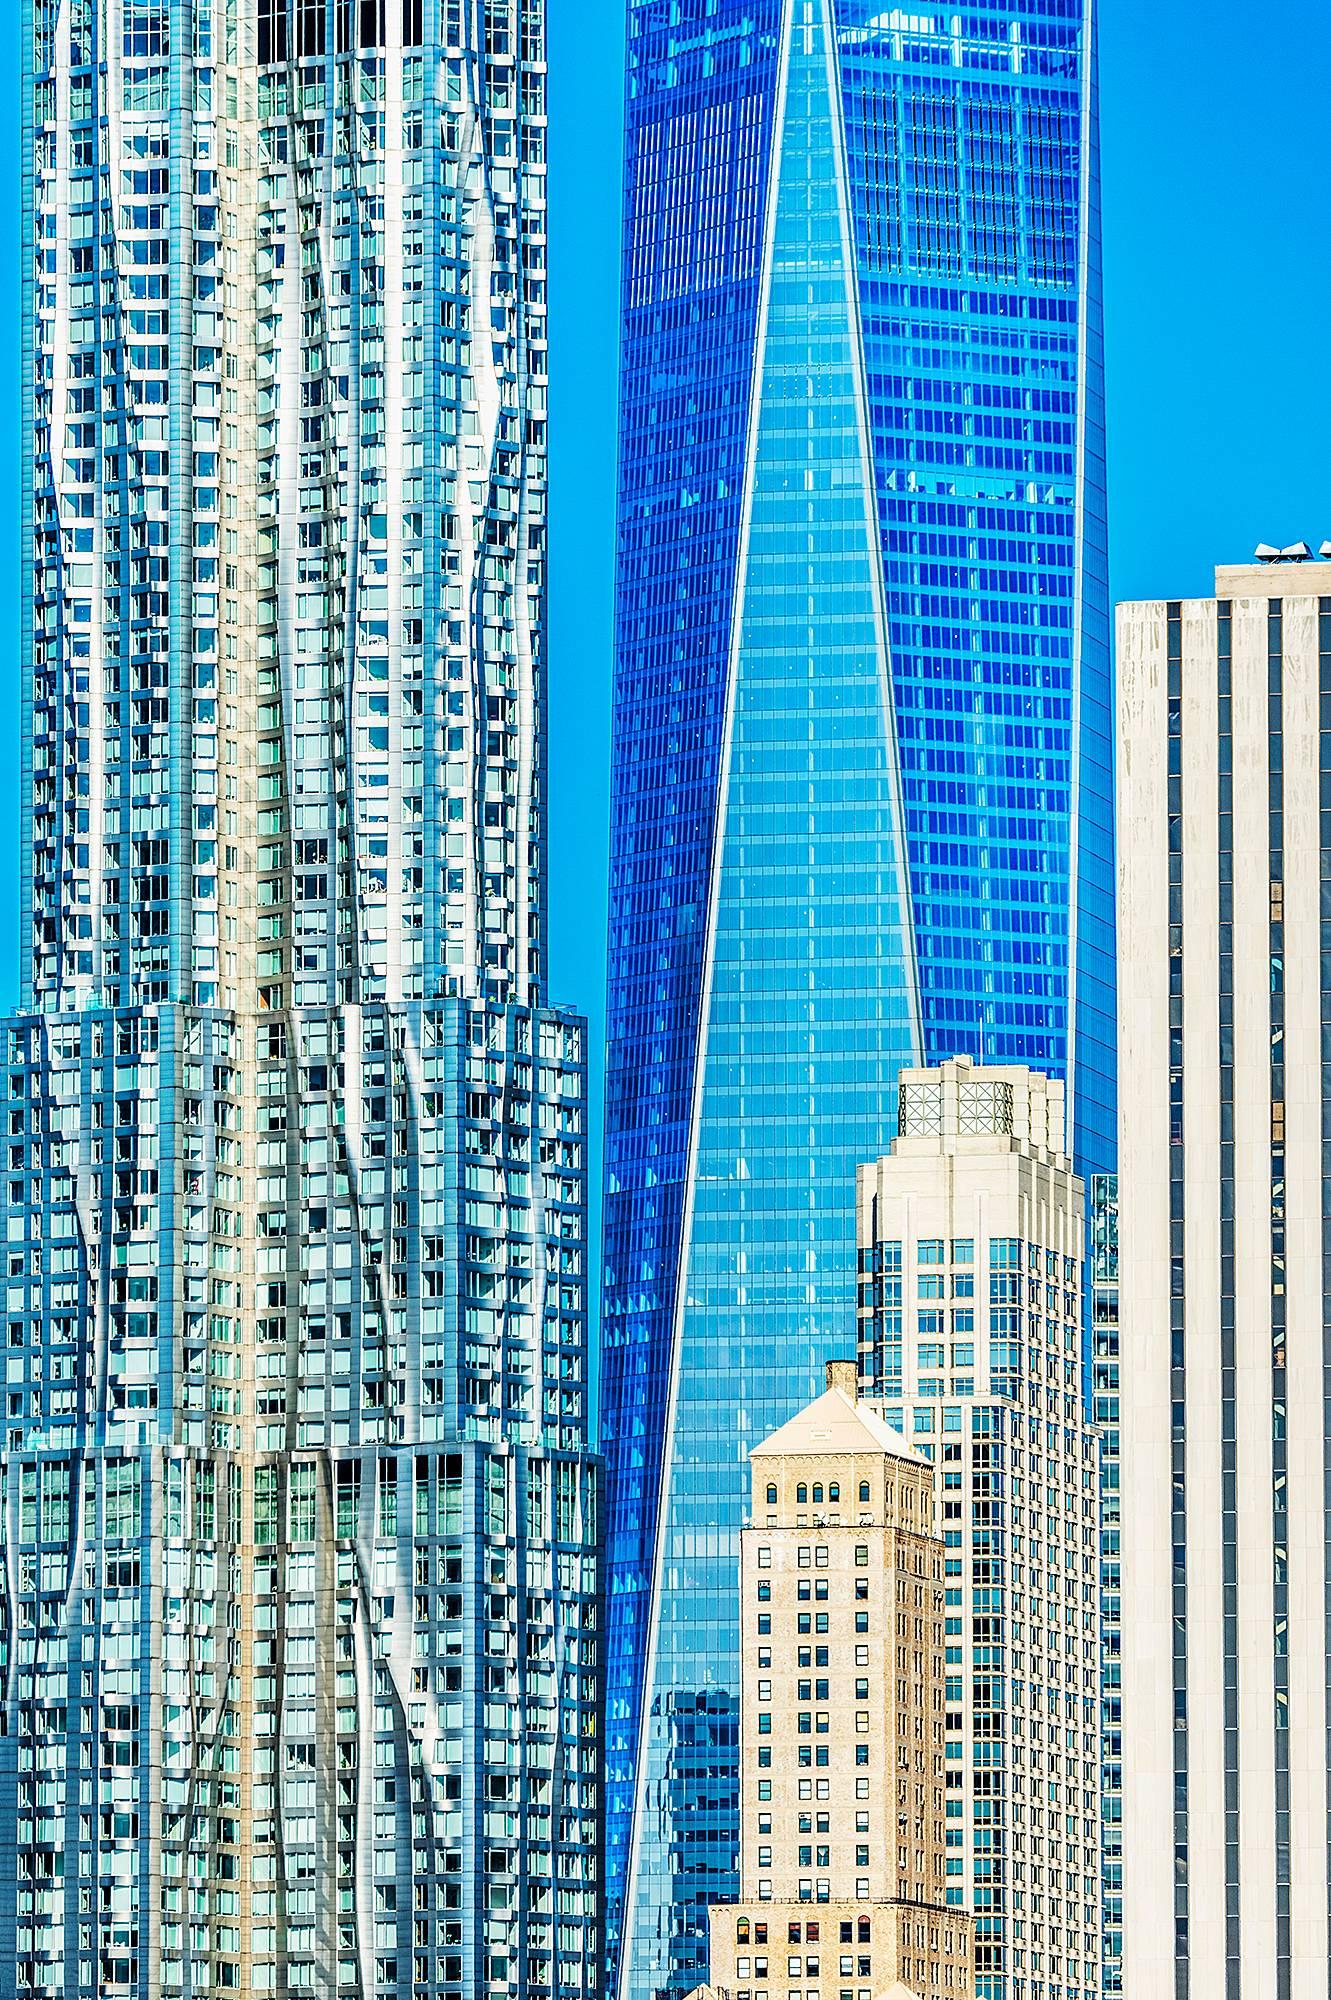 World Trade Center Cerulean blue